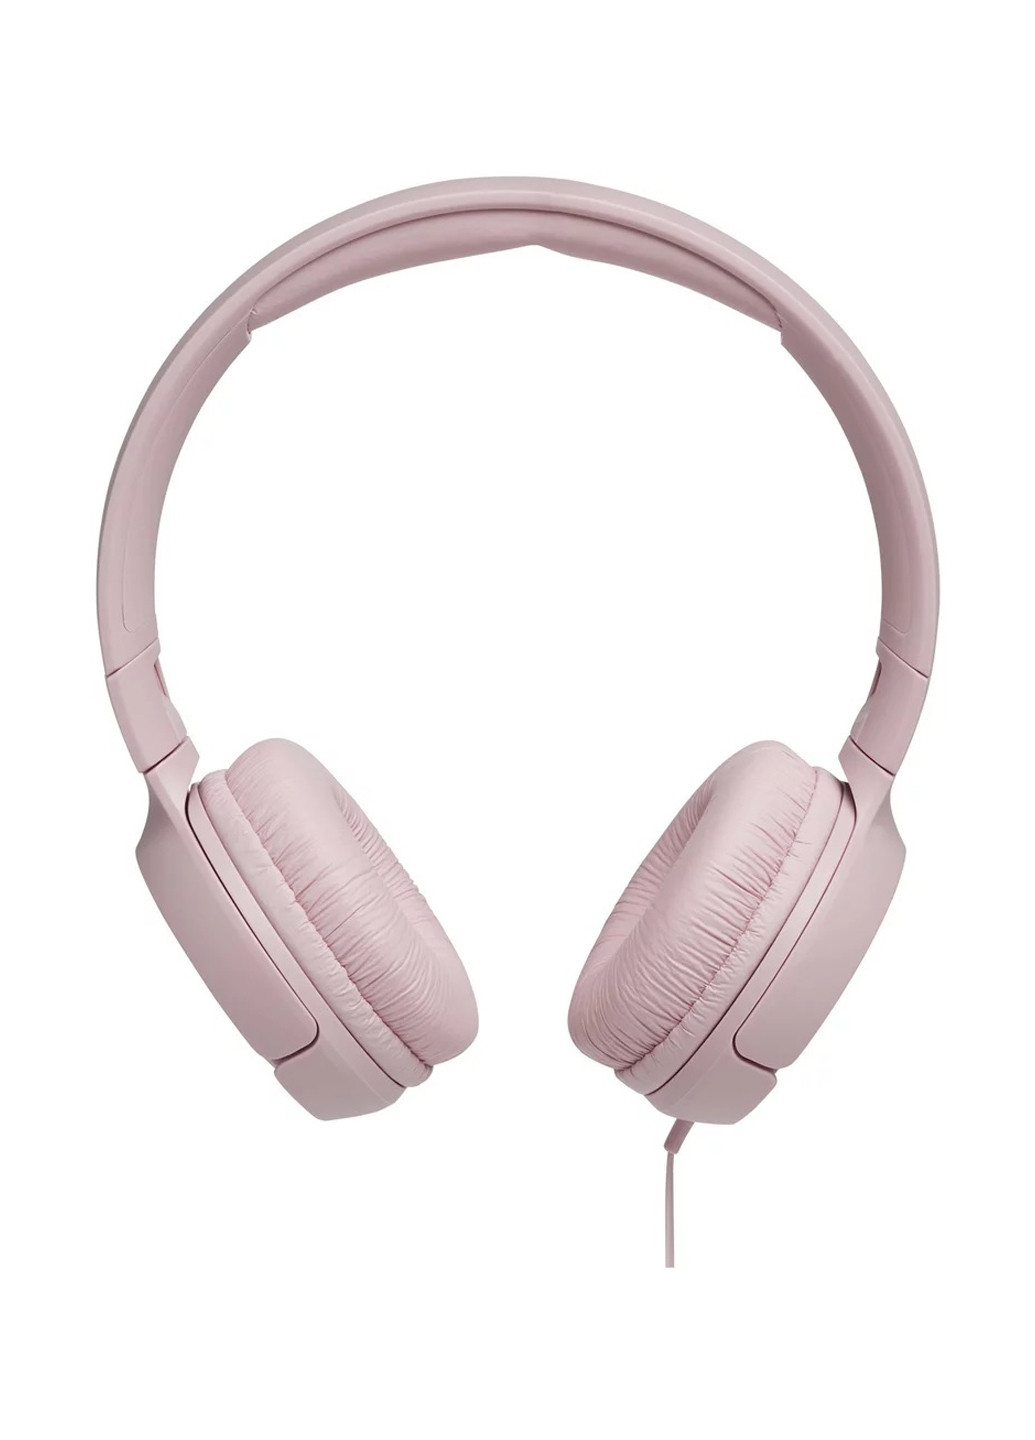 Навушники T500 Pink (T500PIK) JBL t500 pink (jblt500pik) (131908745)